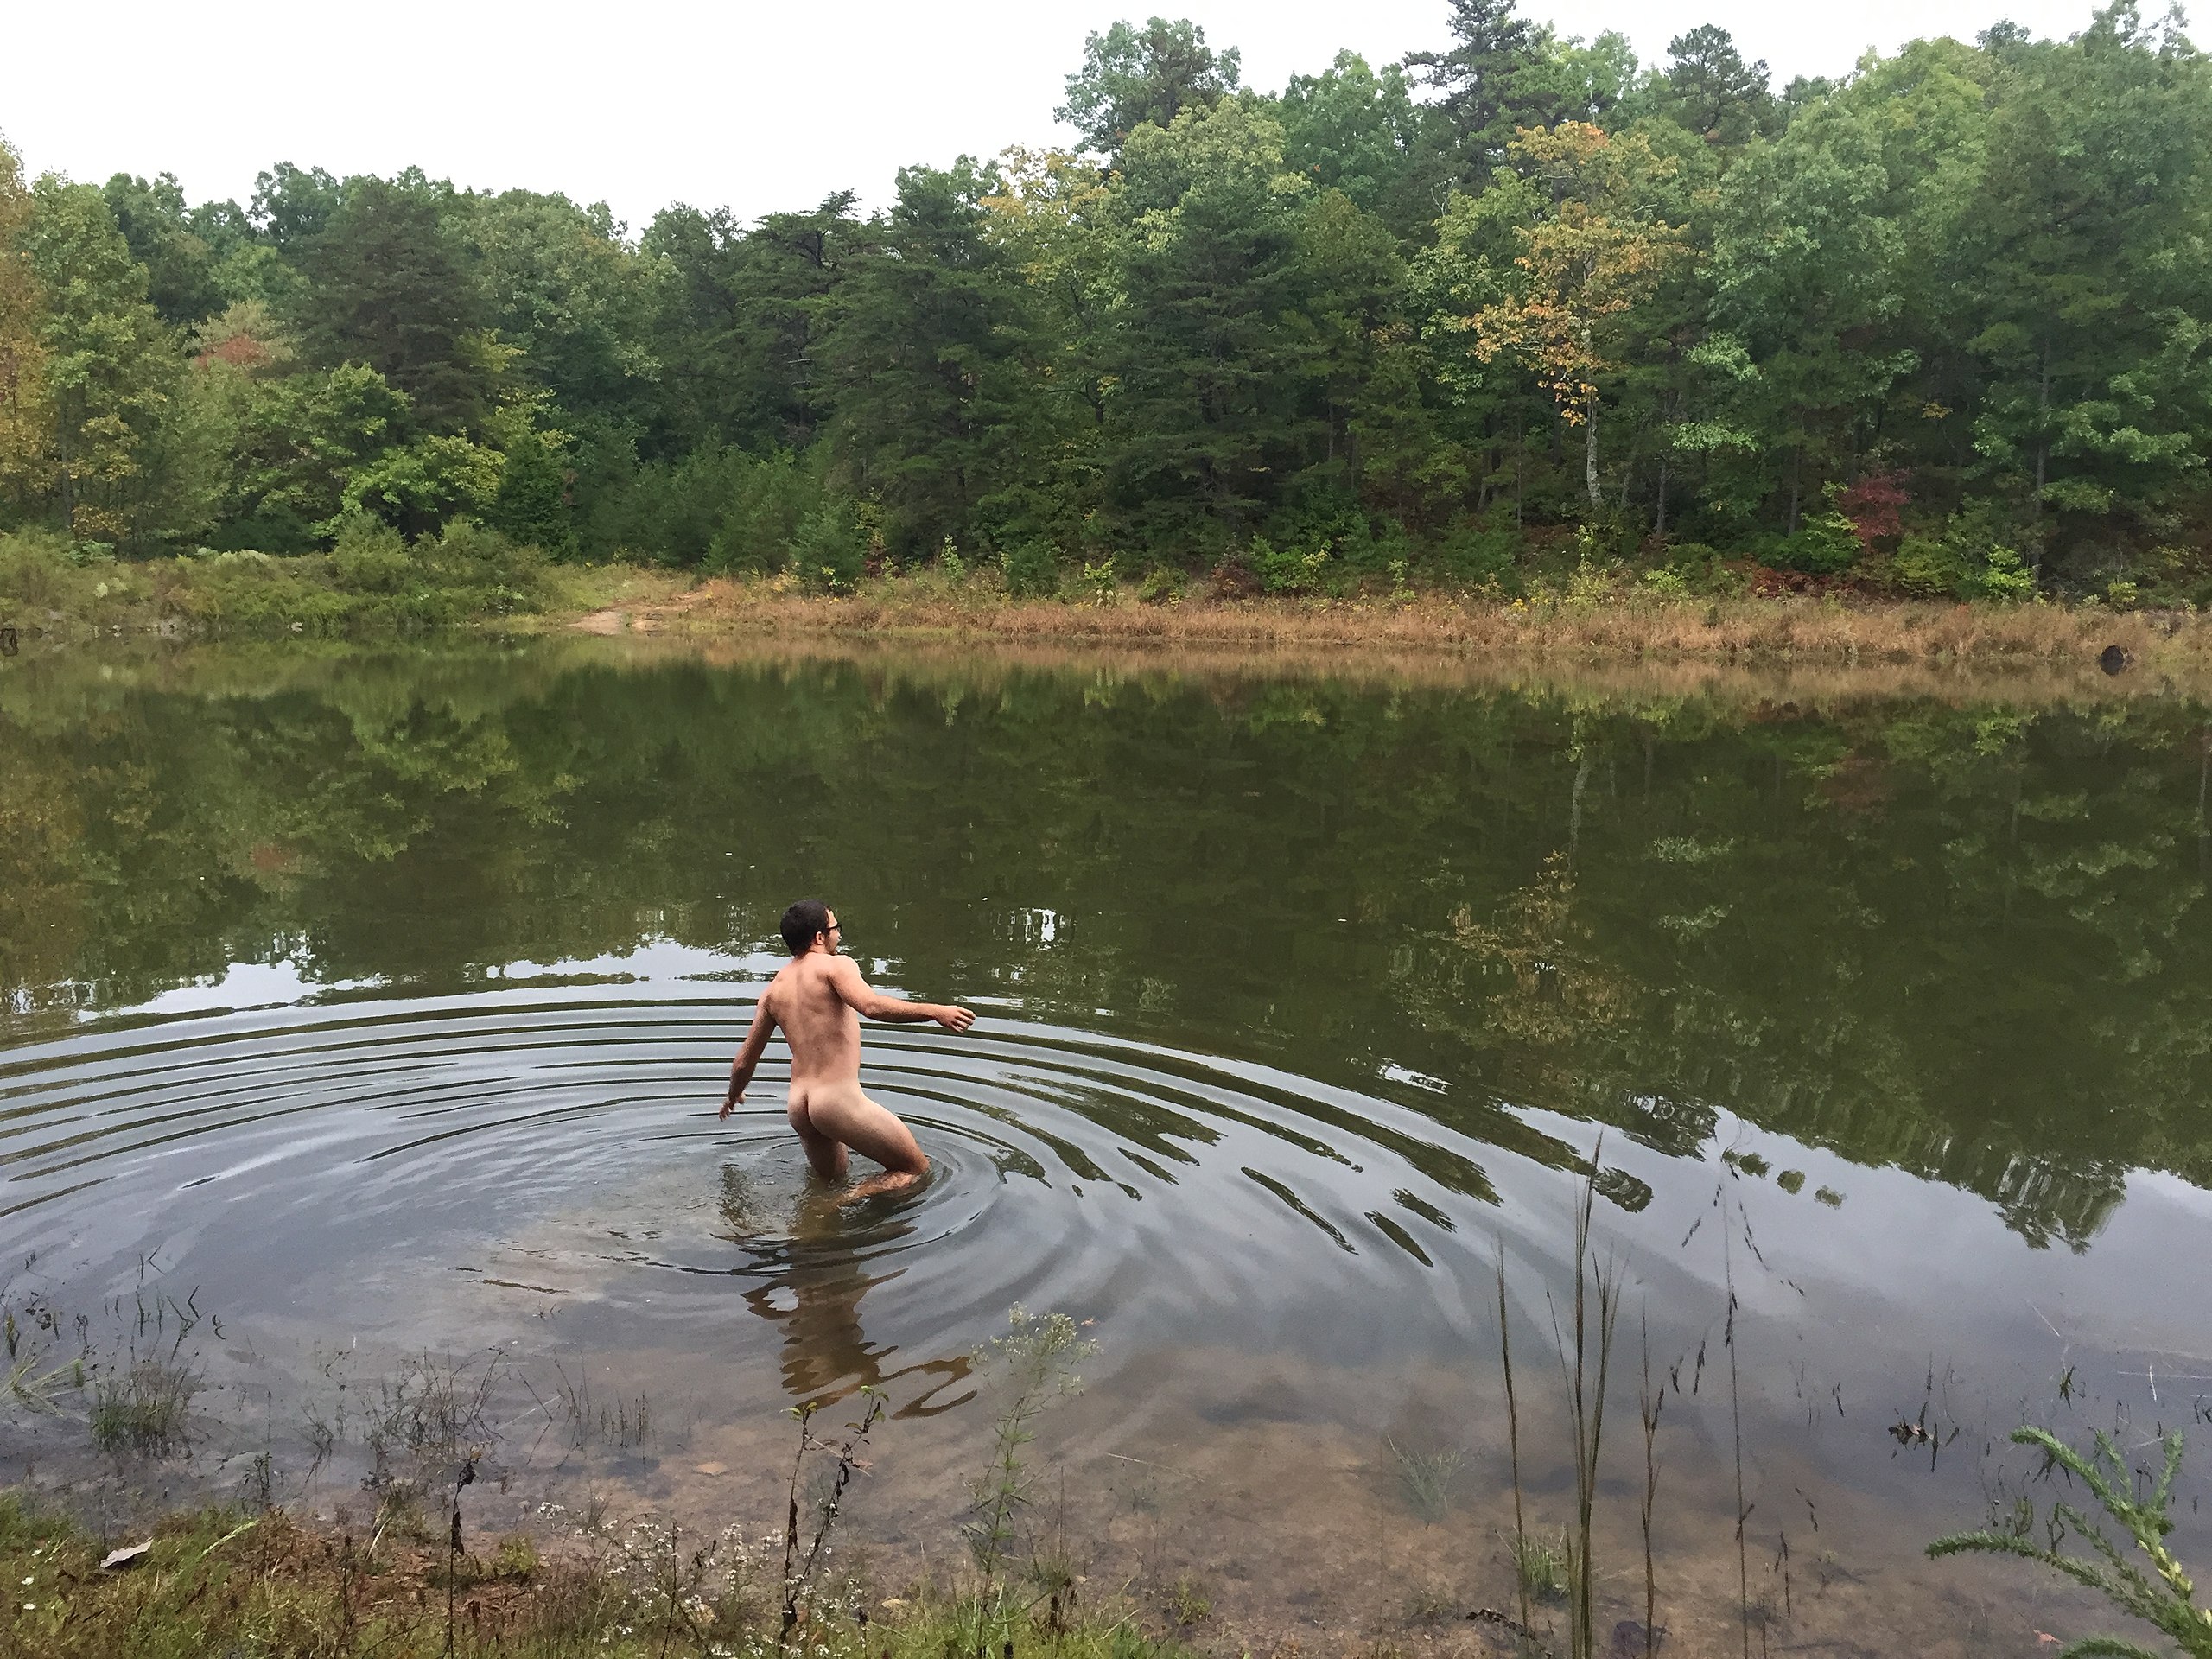 File:Nude man running into the body of water NE of Sawmill Lake Campsite (presumably Sawmill Lake), GA.jpg - Wikimedia Commons